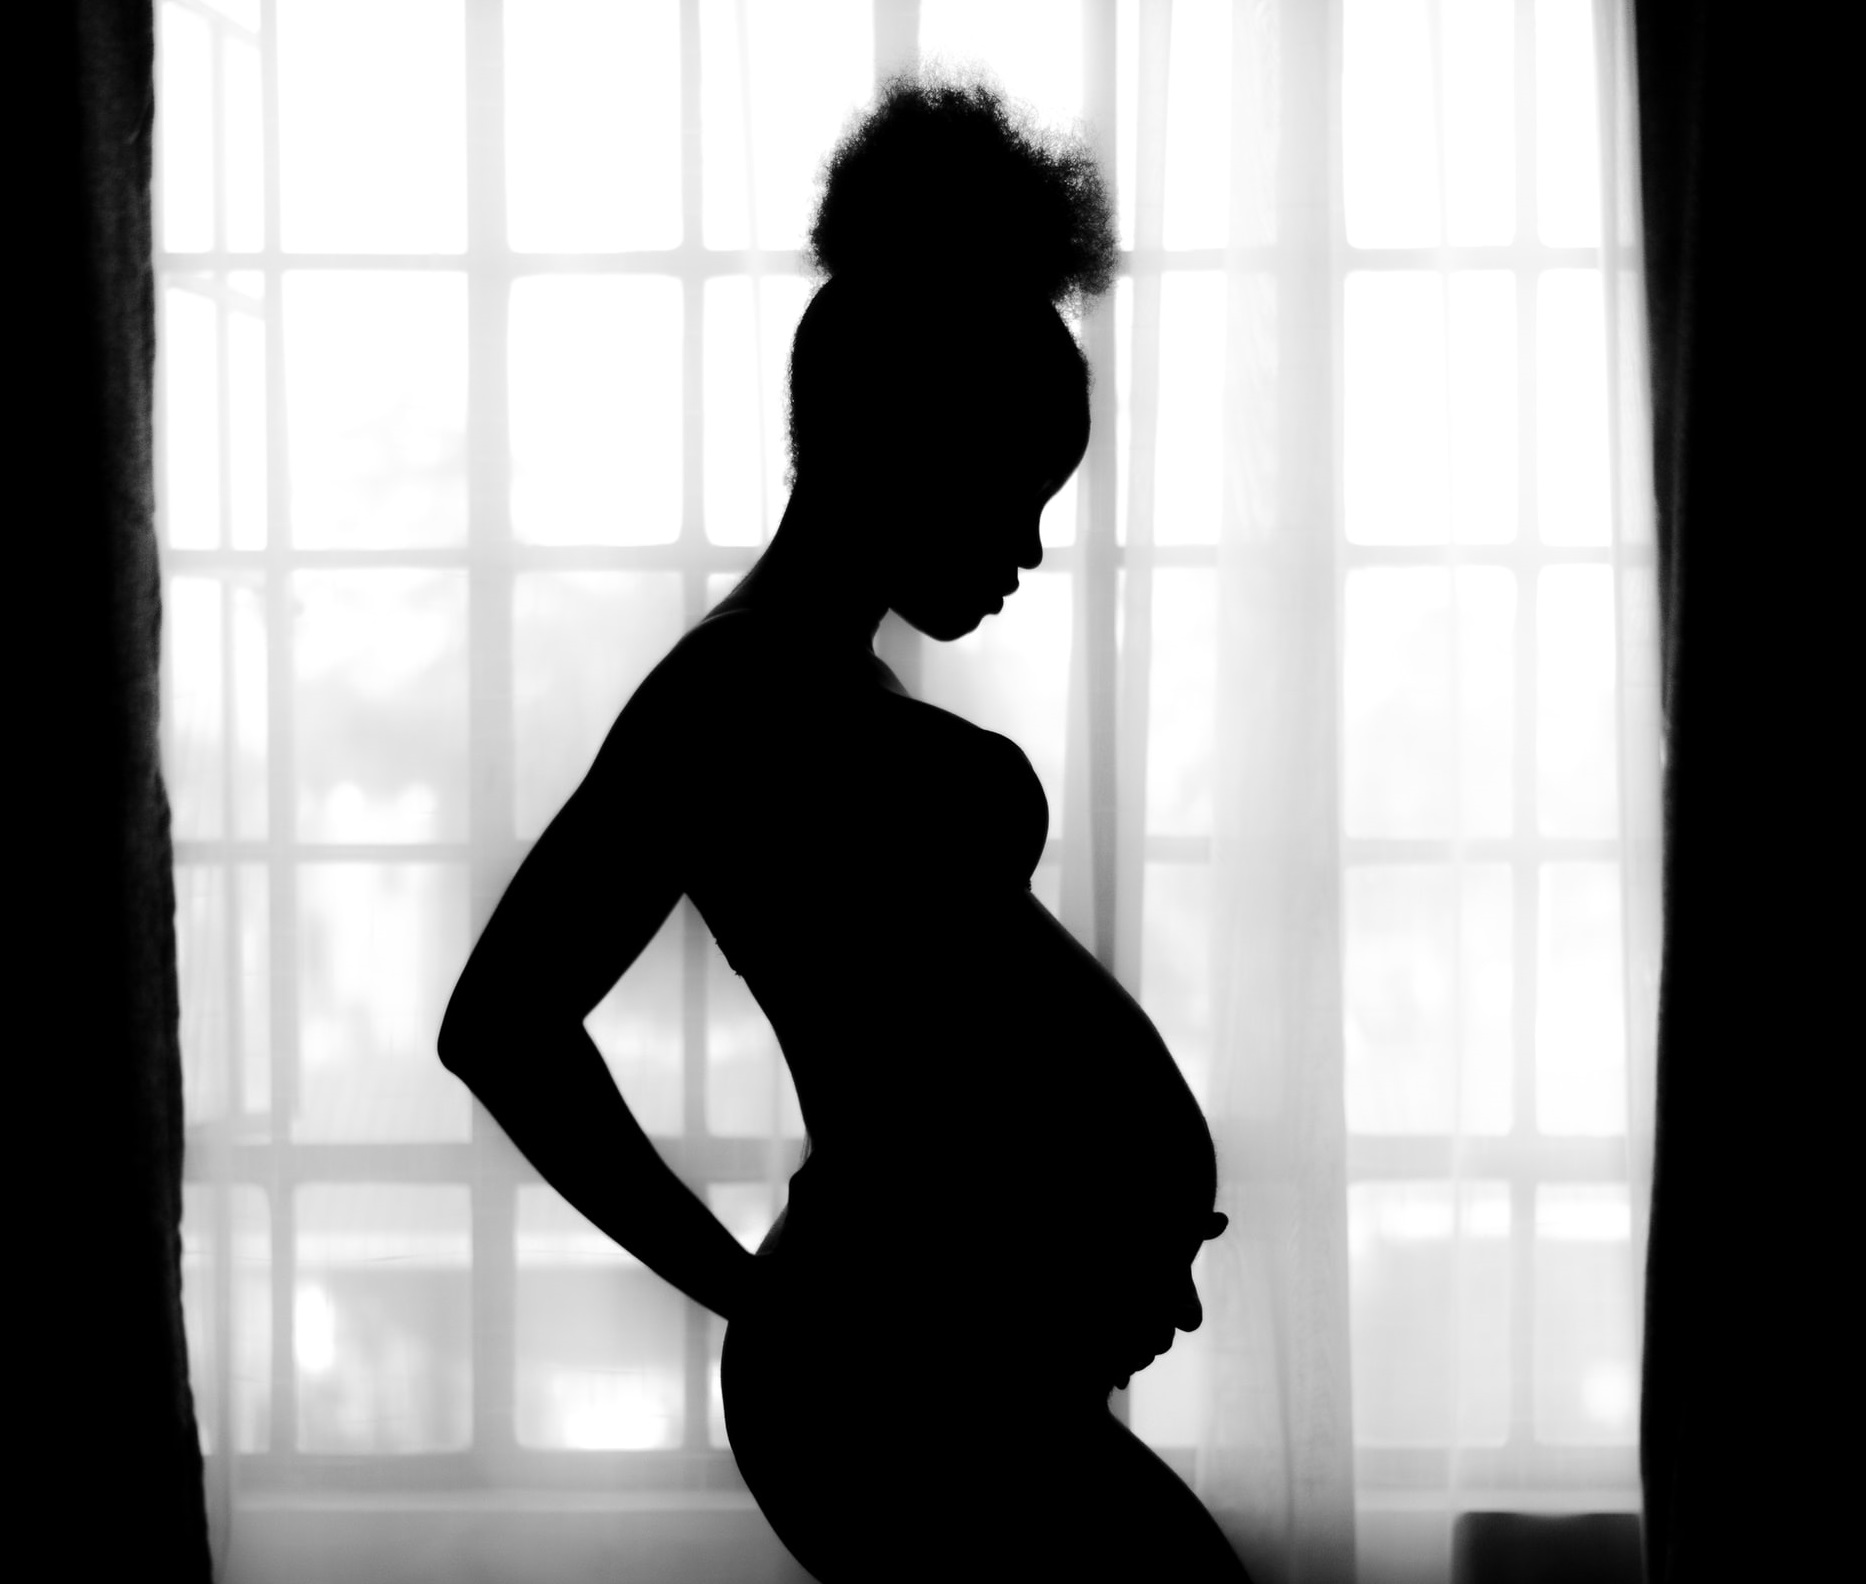 A Black pregnant person standing in silhouette